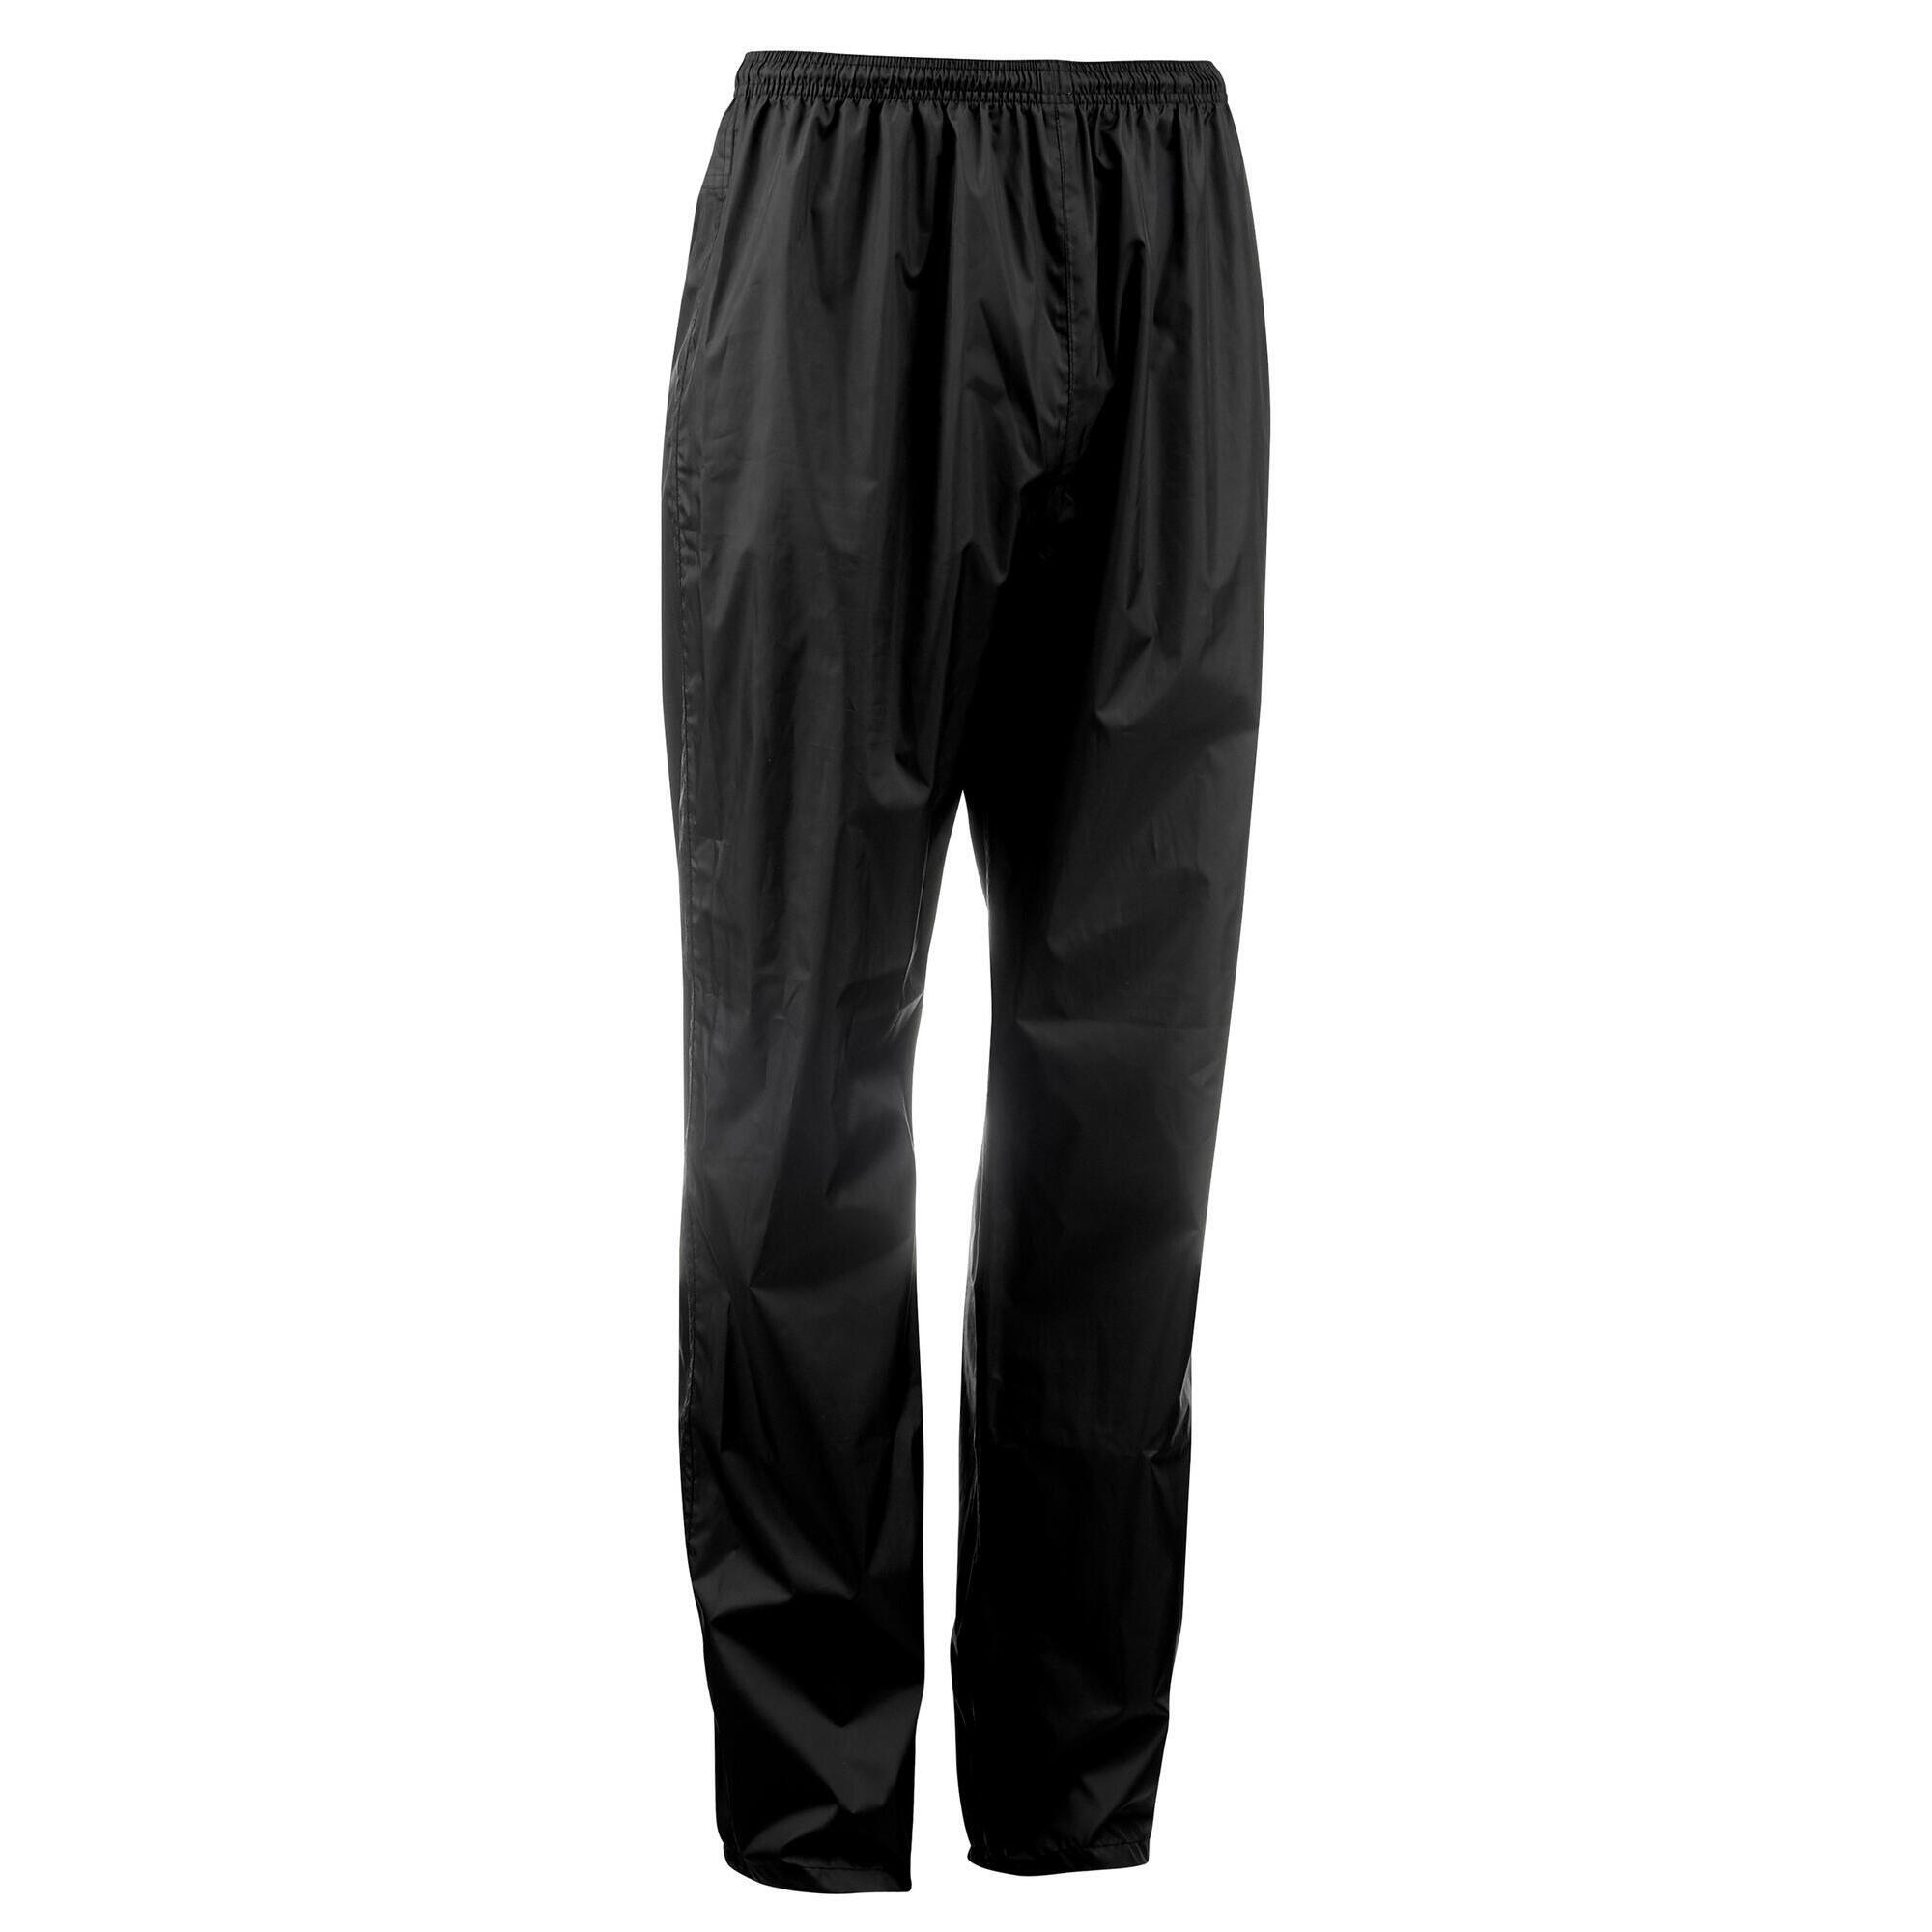 decathlon waterproof trousers